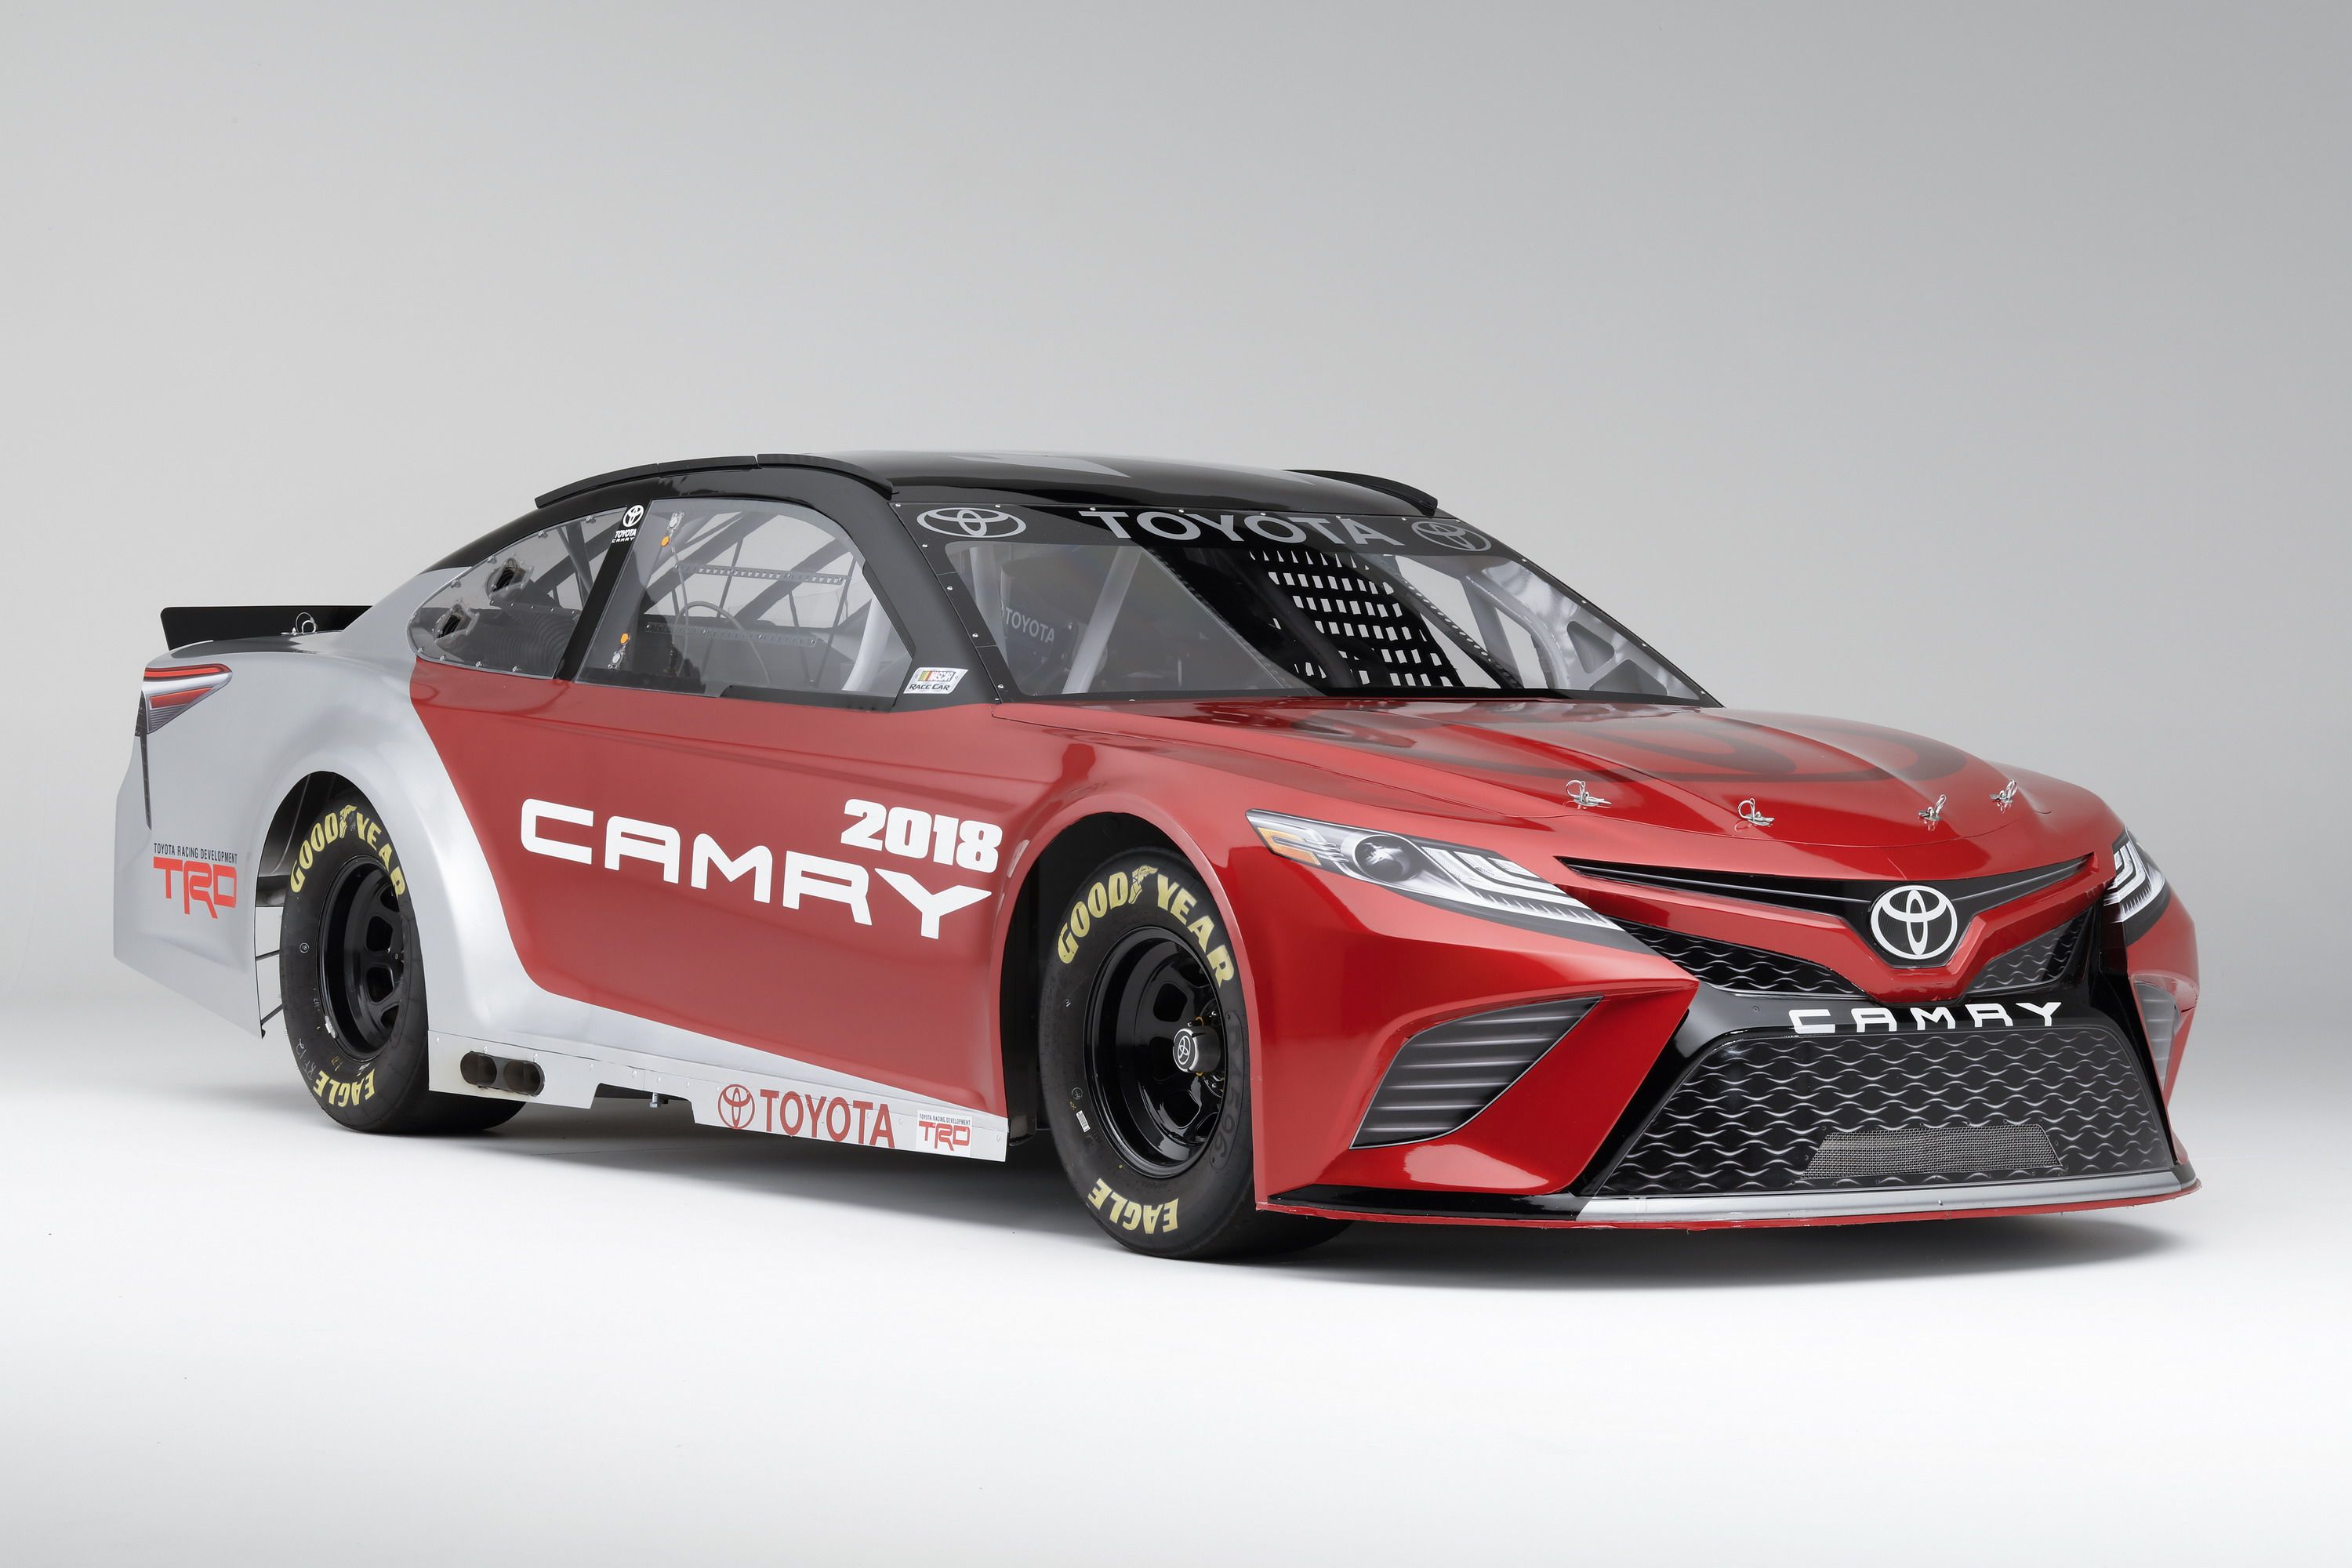 2018 Toyota Camry NASCAR Cup Car